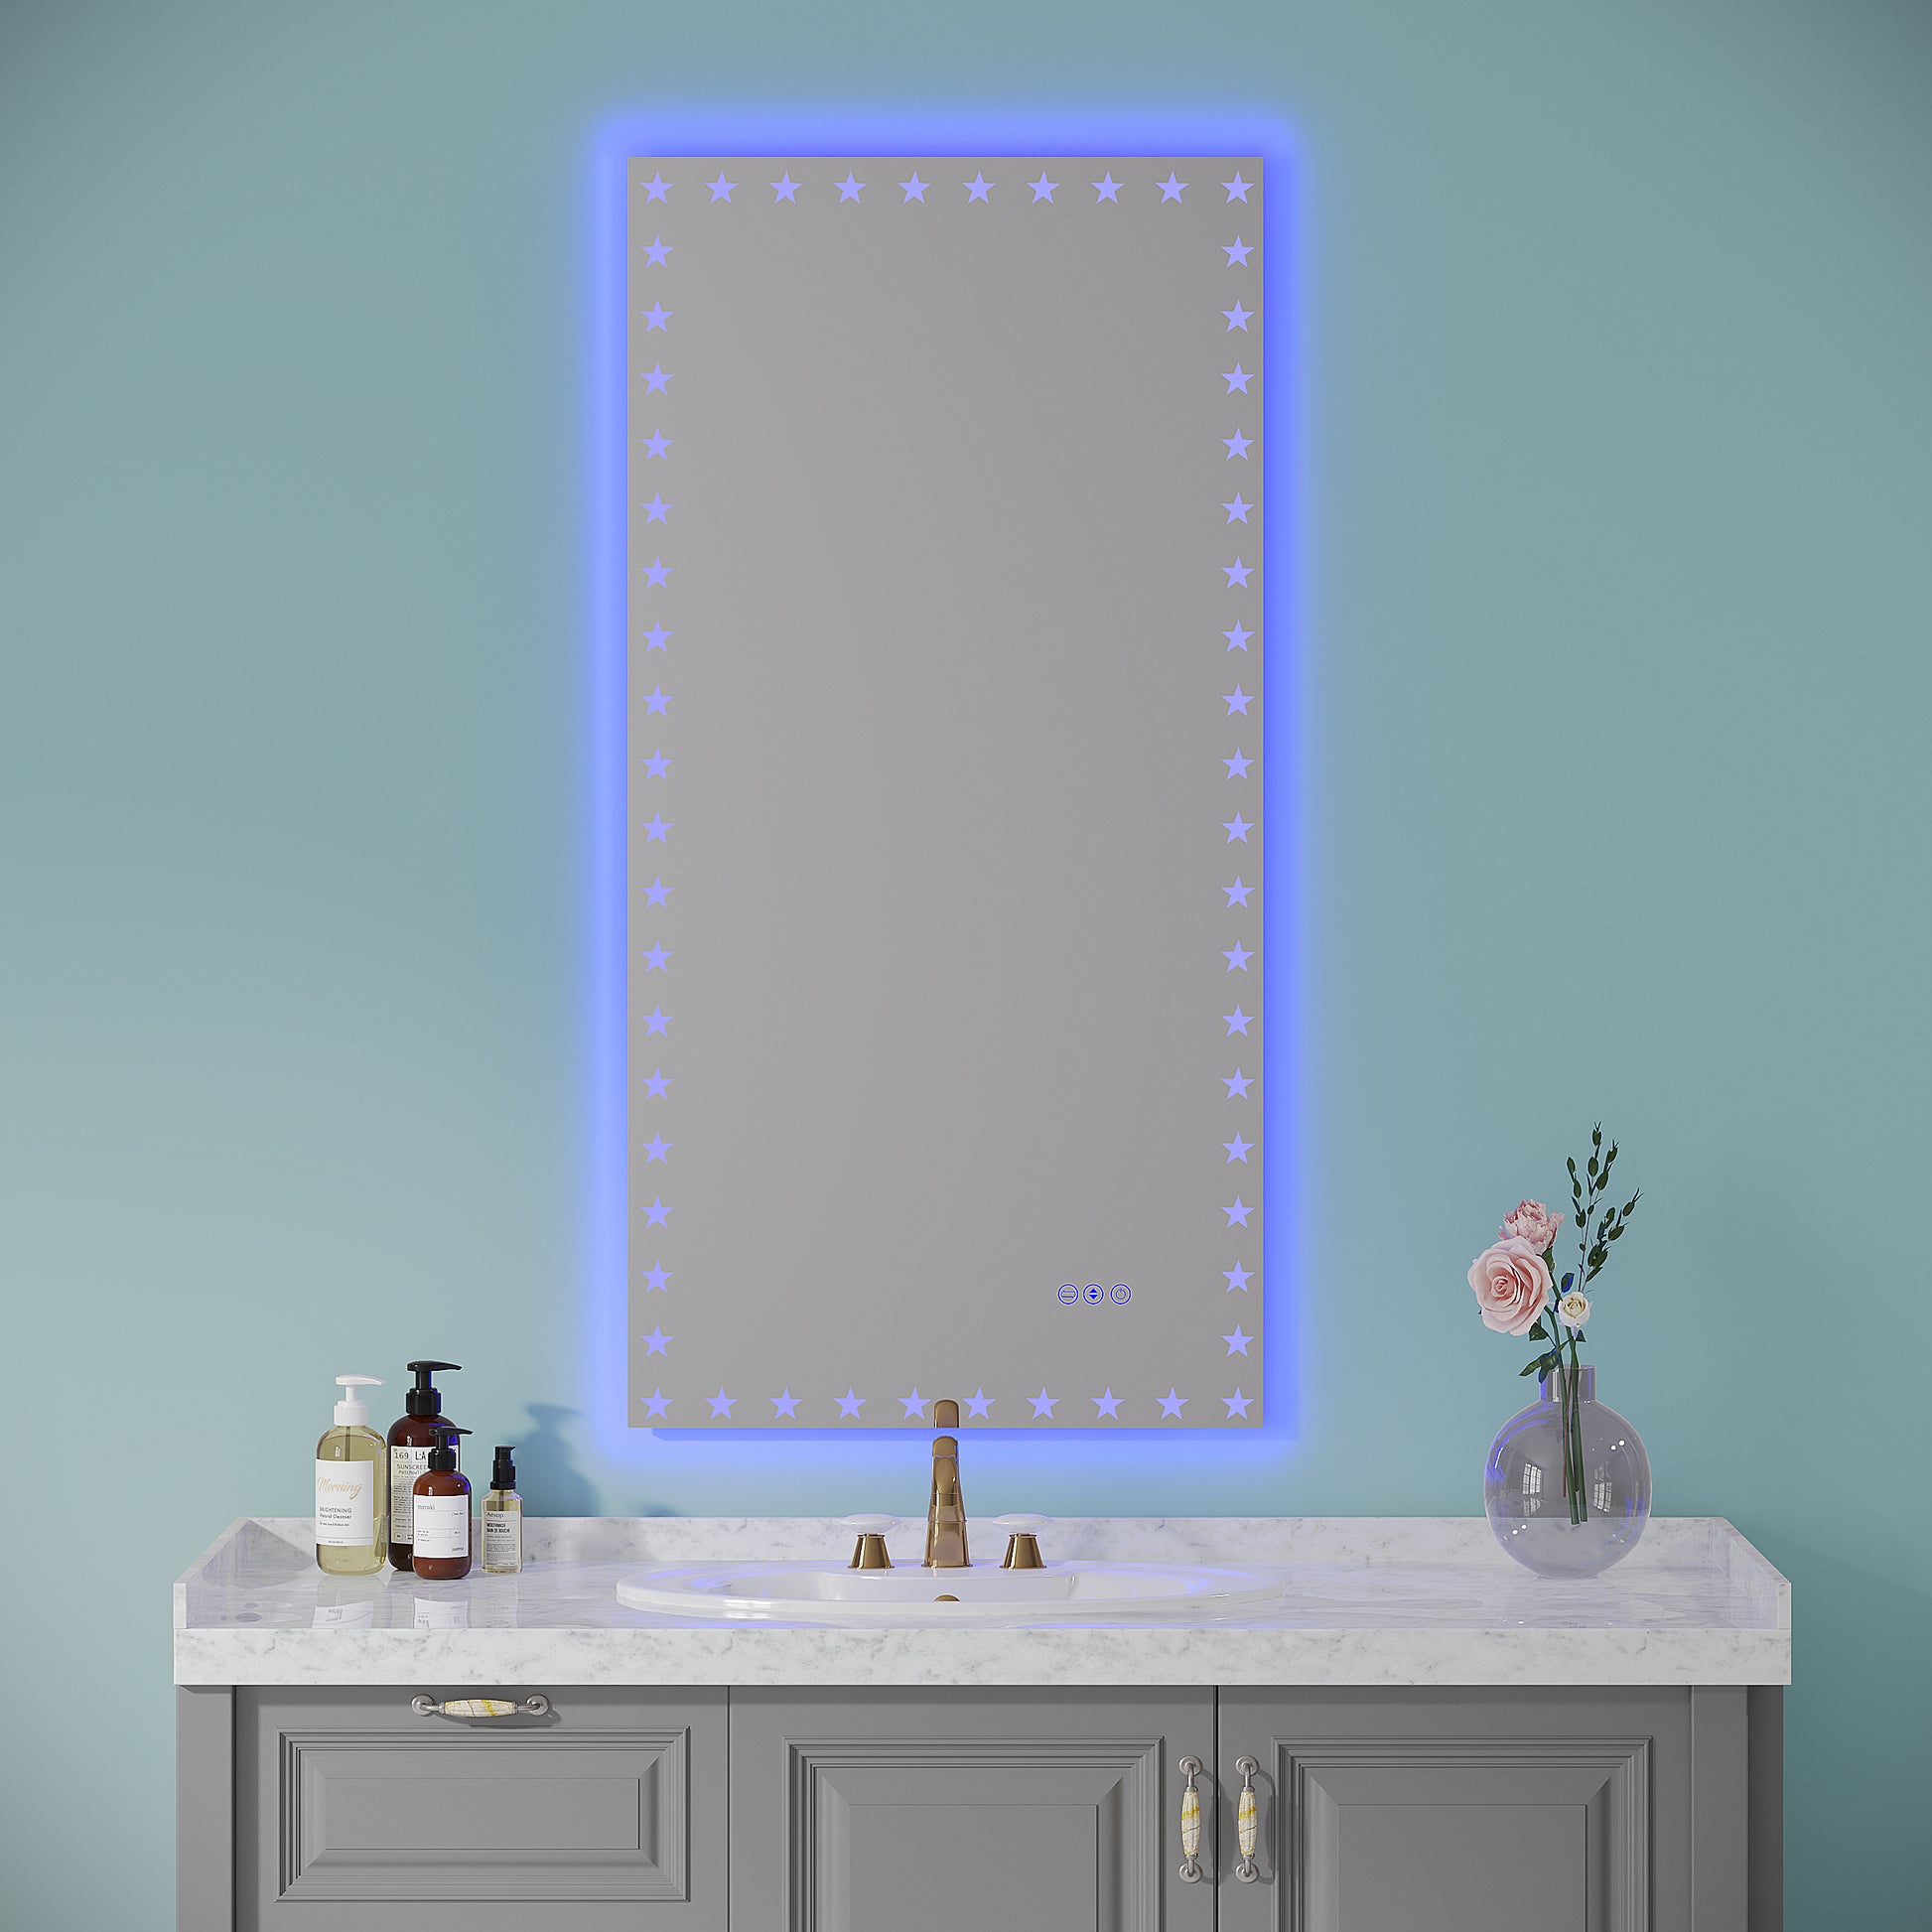 48X24 inch LED Bathroom Mirror with Lights Backlit RGB white-aluminium